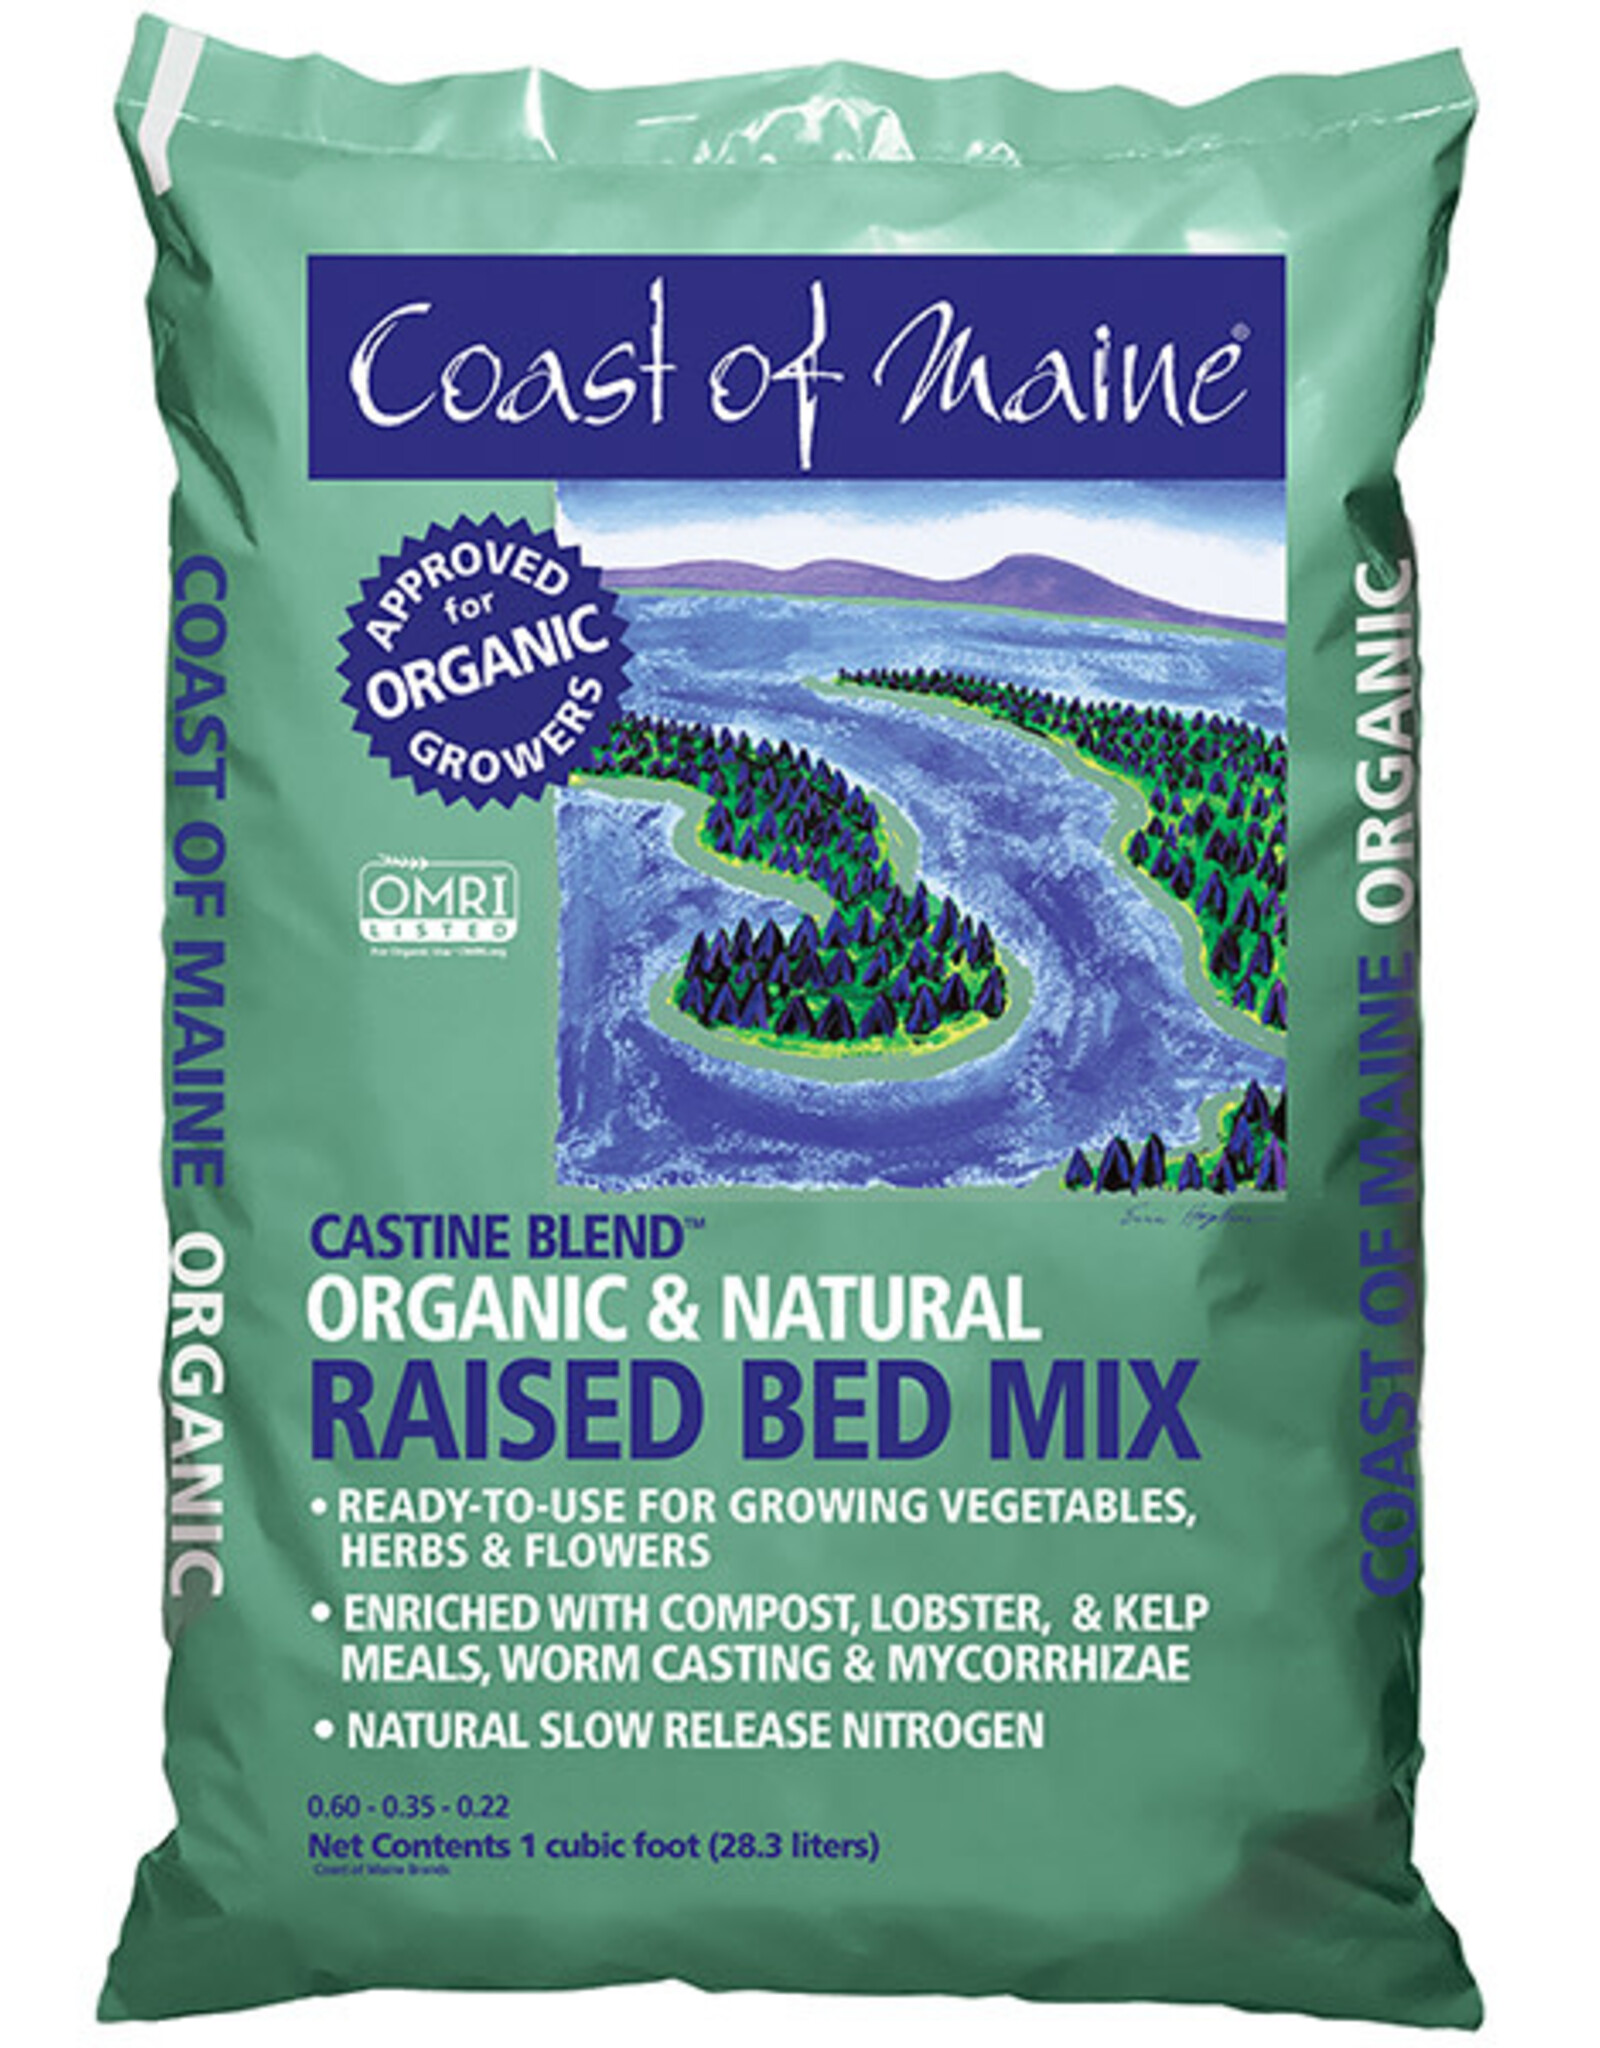 COAST OF MAINE RAISED BED MIX COAST OF MAINE 2 CU FT castine